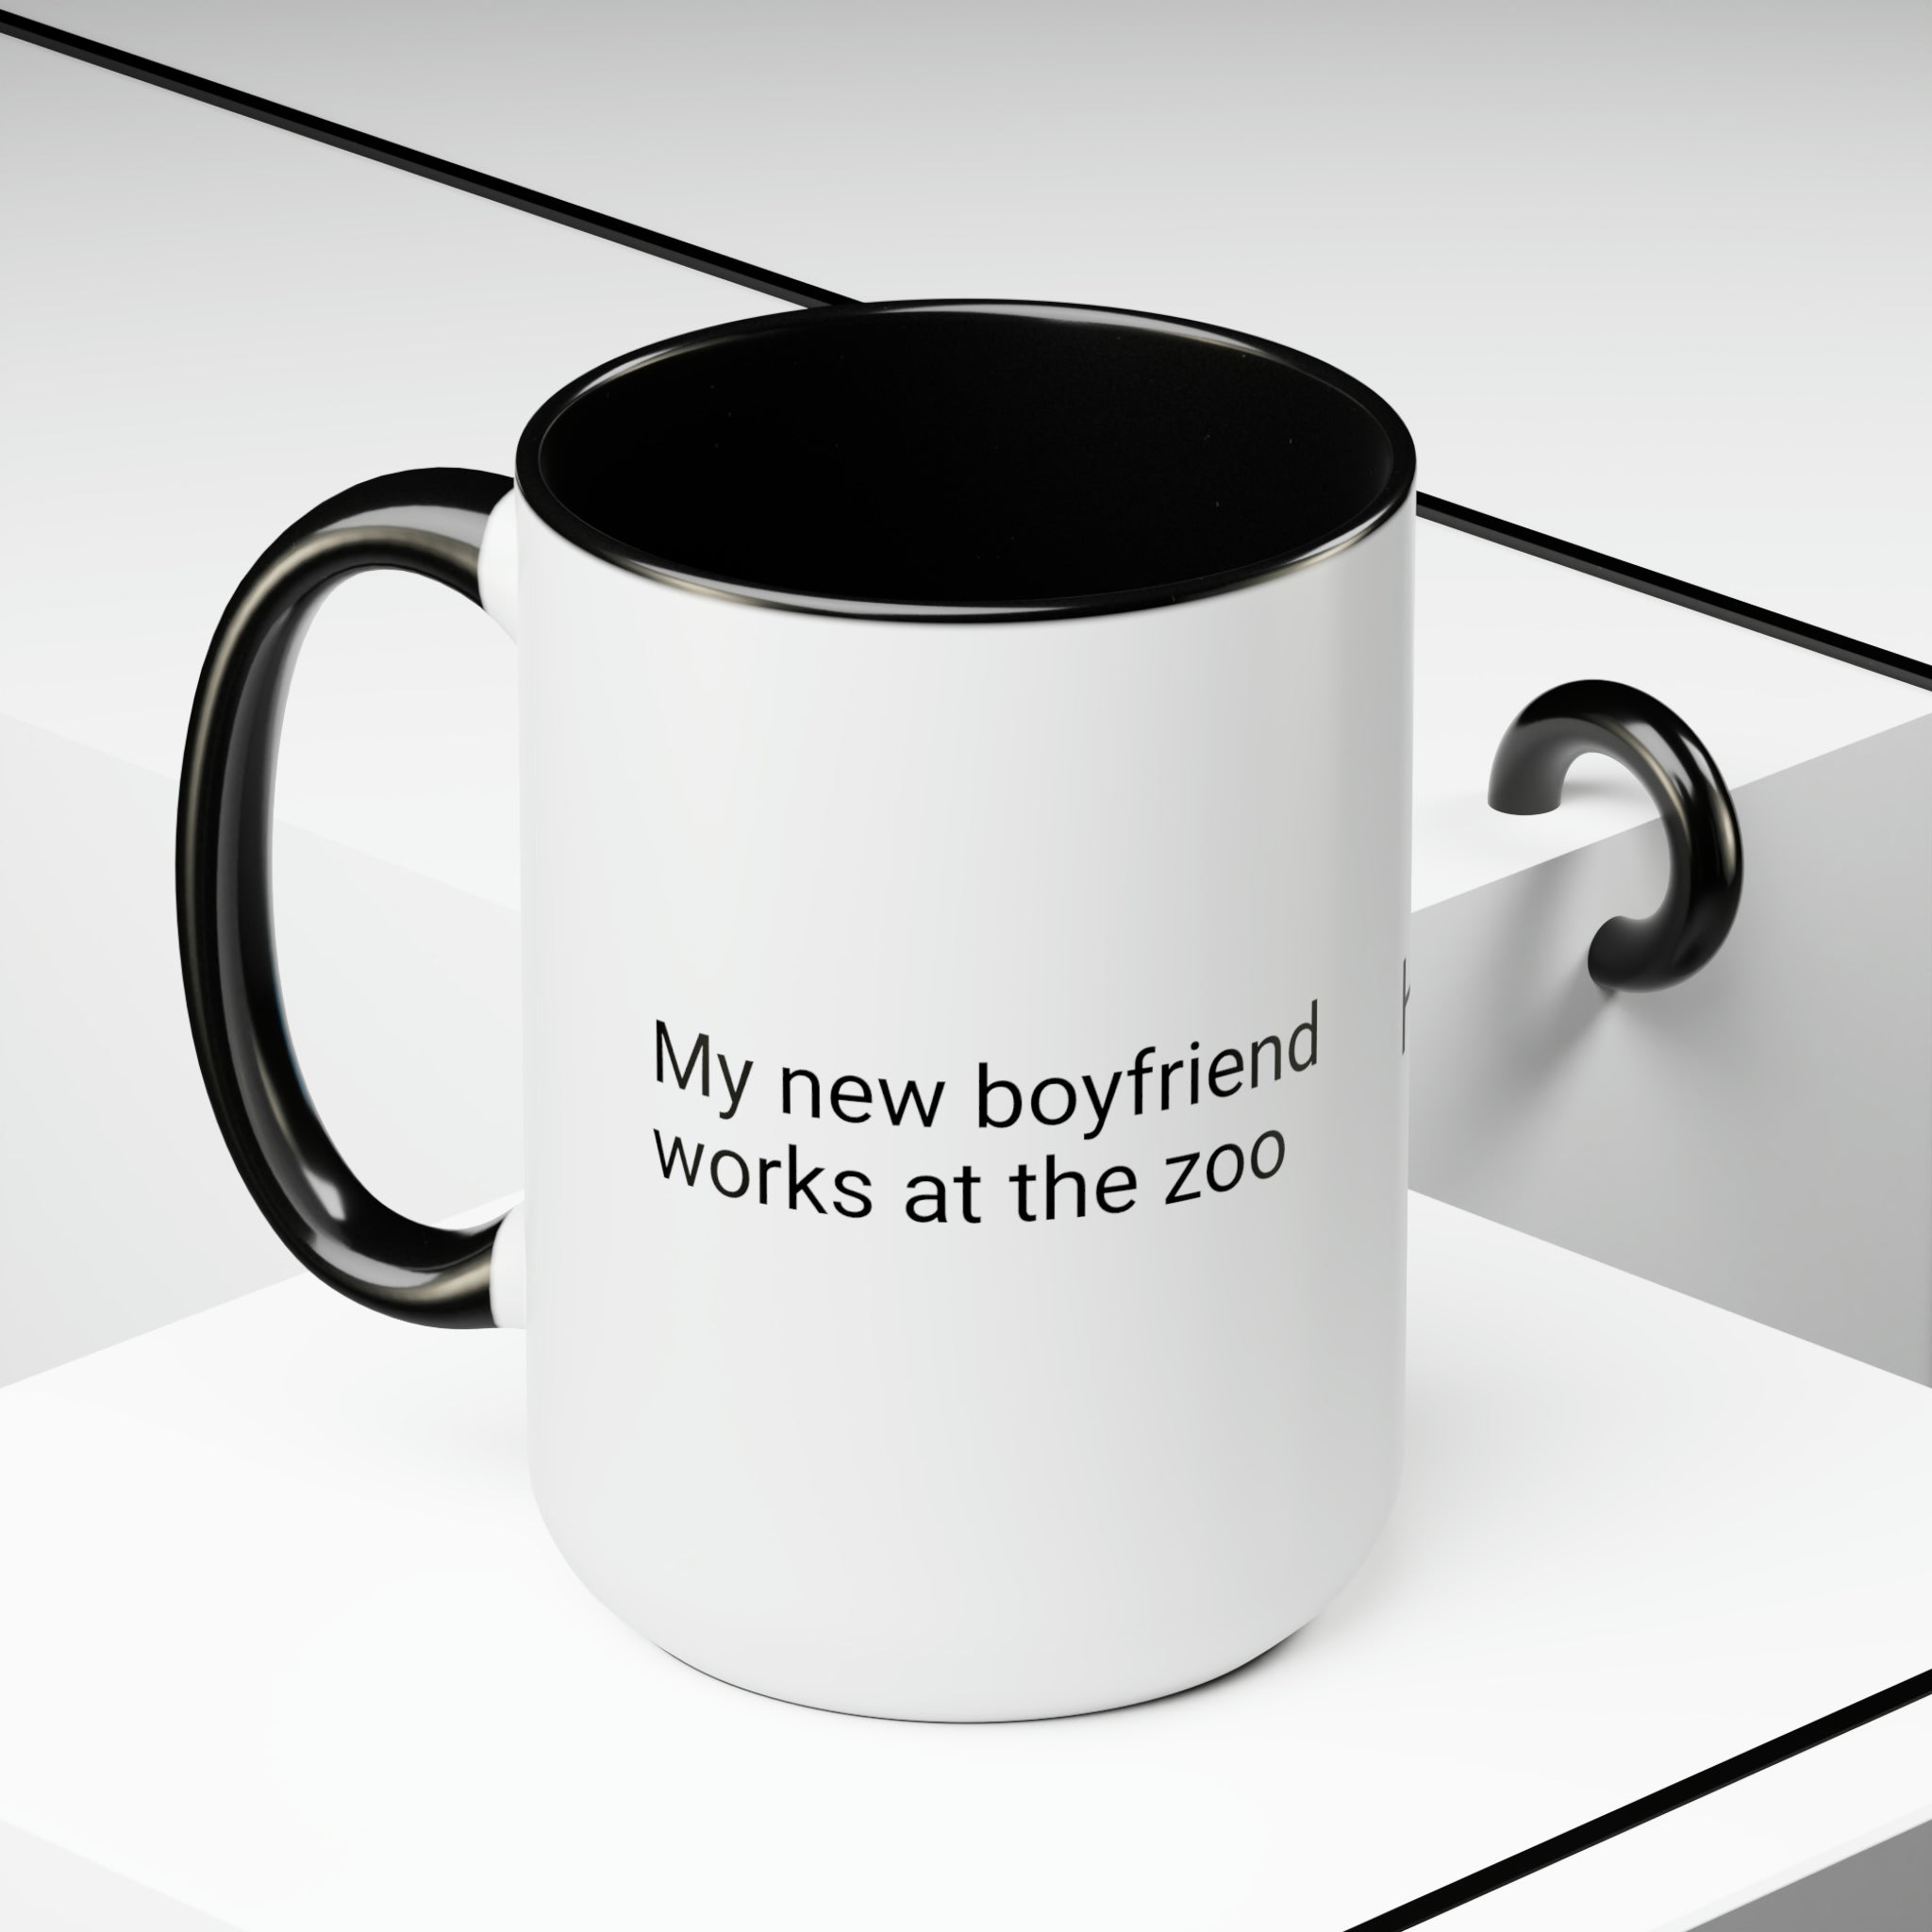 My new boyfriend works at the zoo.  He's a KEEPER - Two-Tone Coffee Mugs, 15oz.